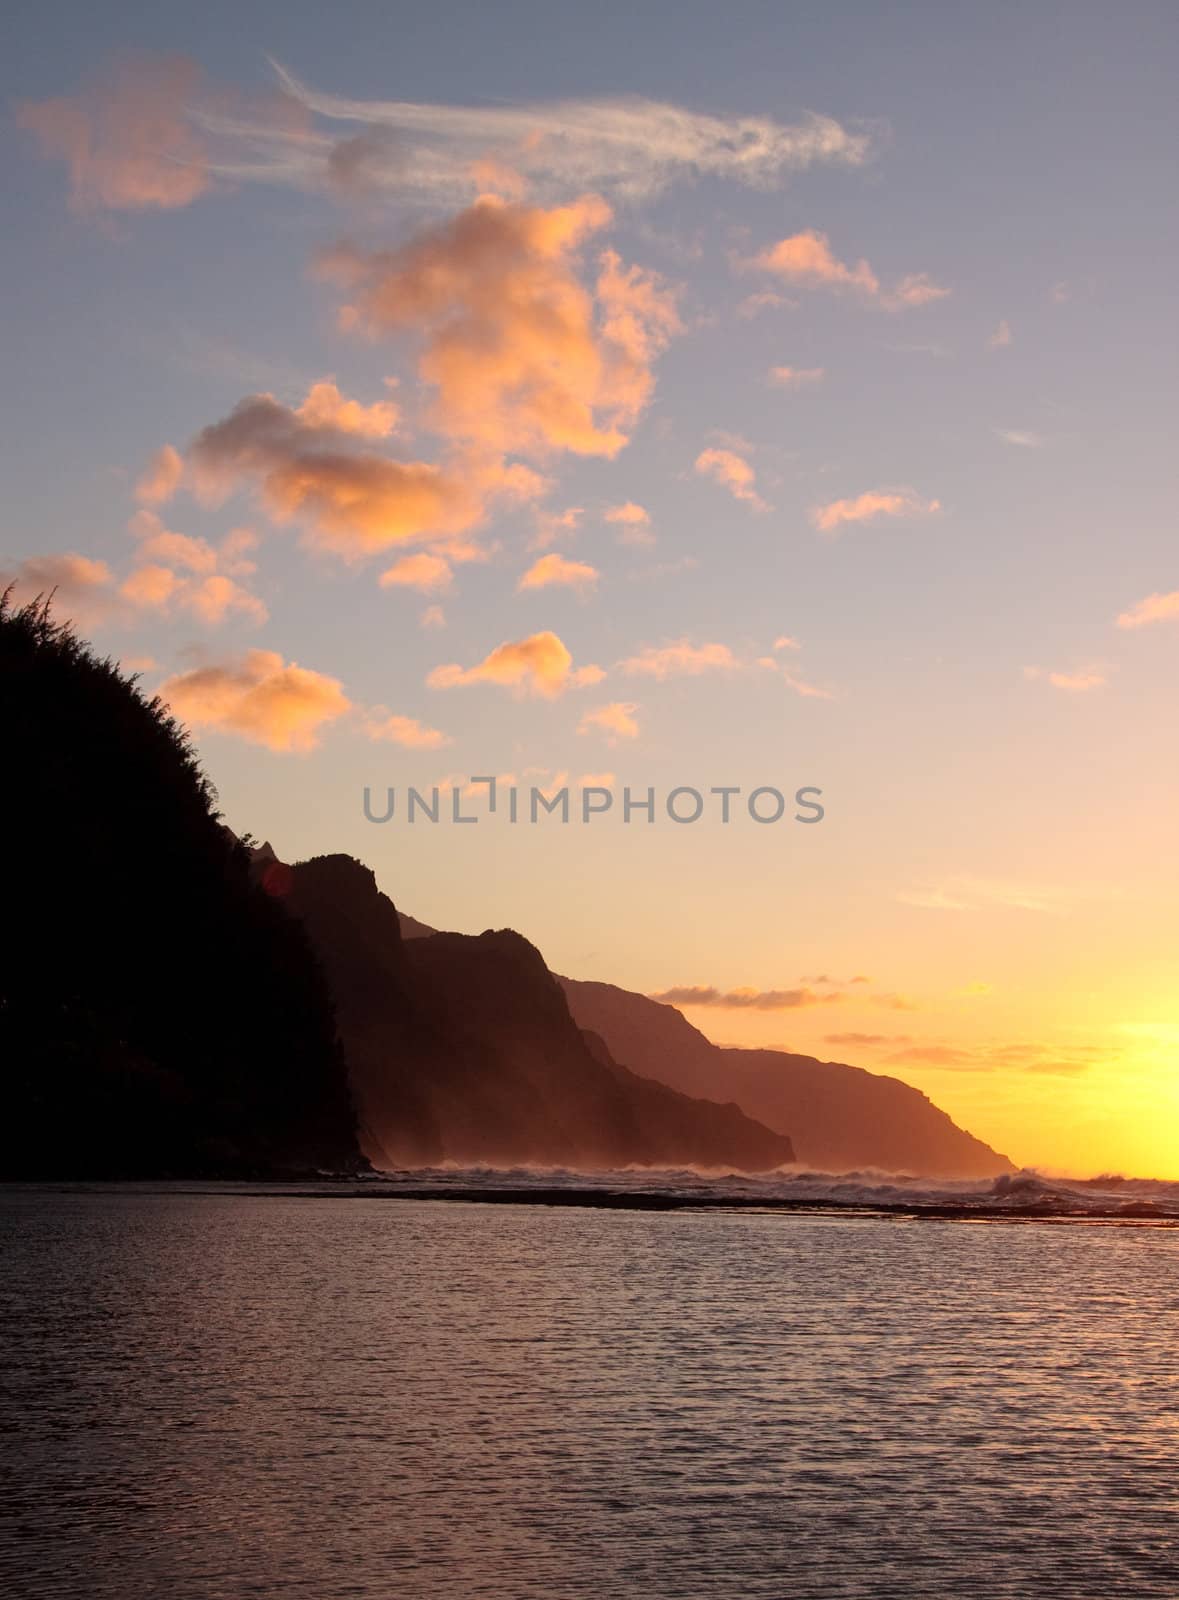 Vertical format of the headlands of the Kauai coast illuminated at sunset